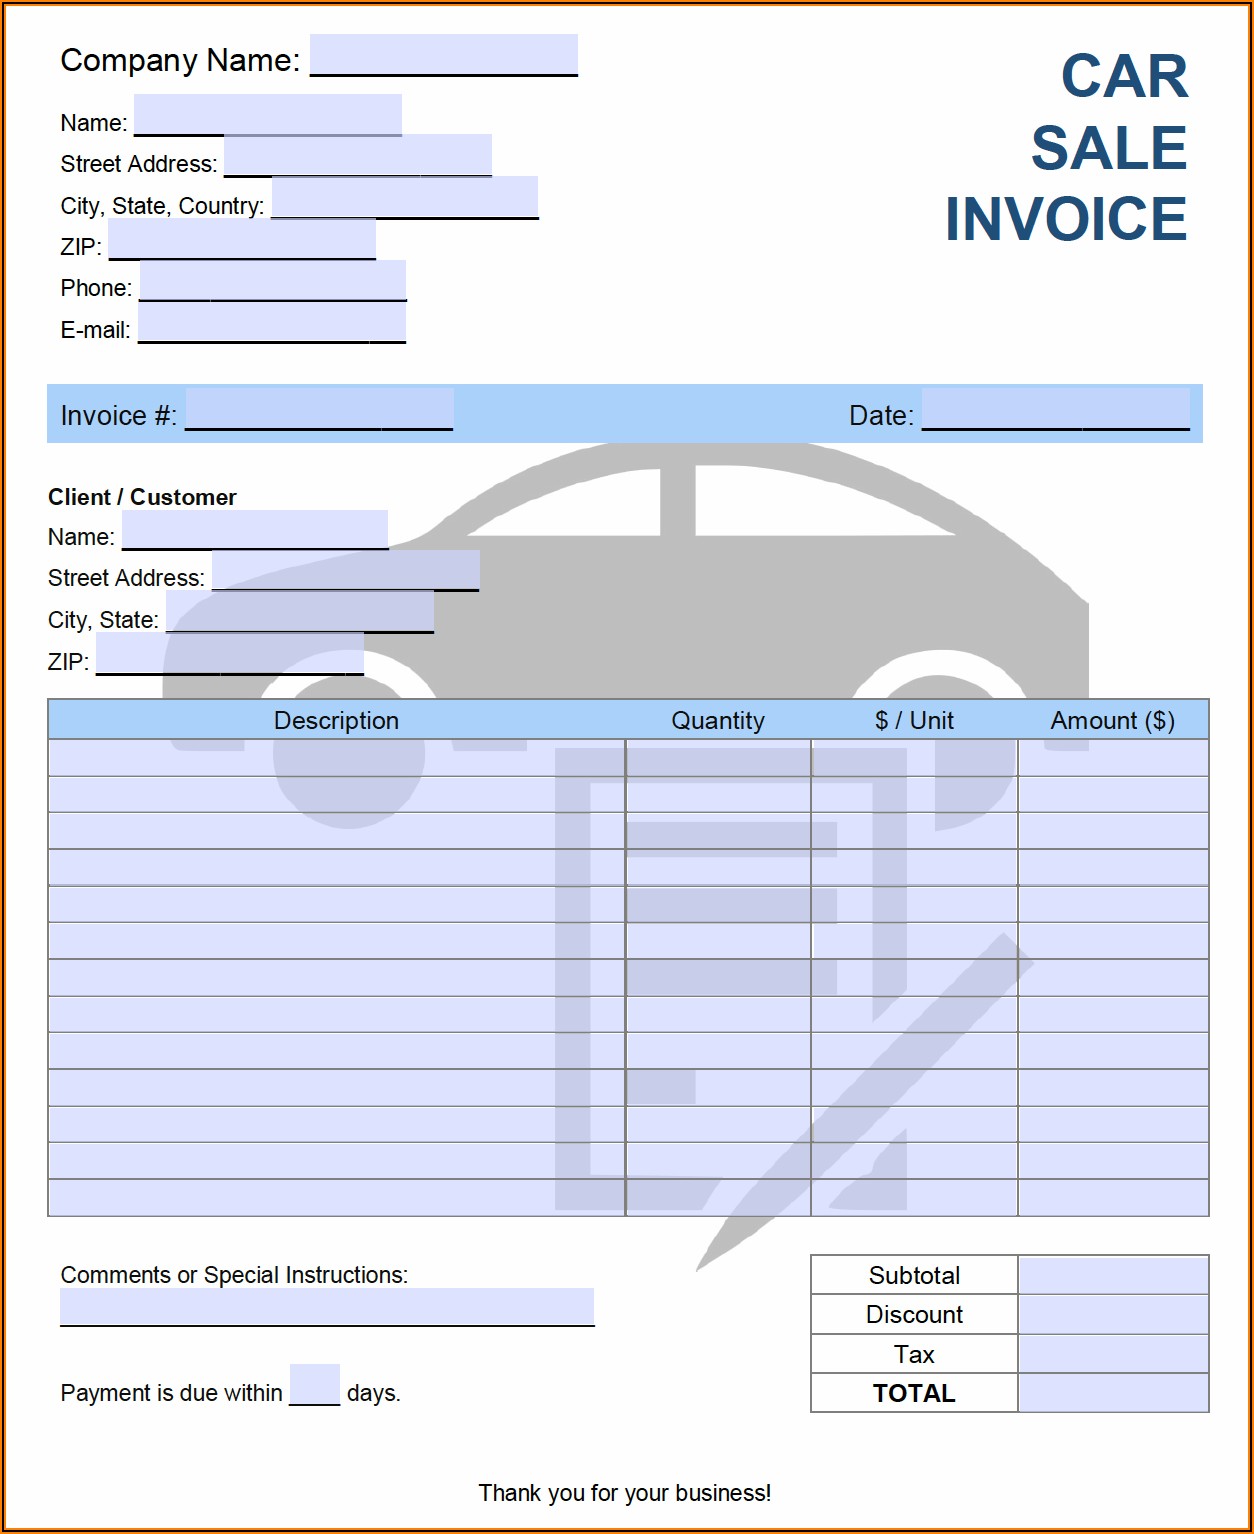 Car Sales Invoice Template Free Pdf